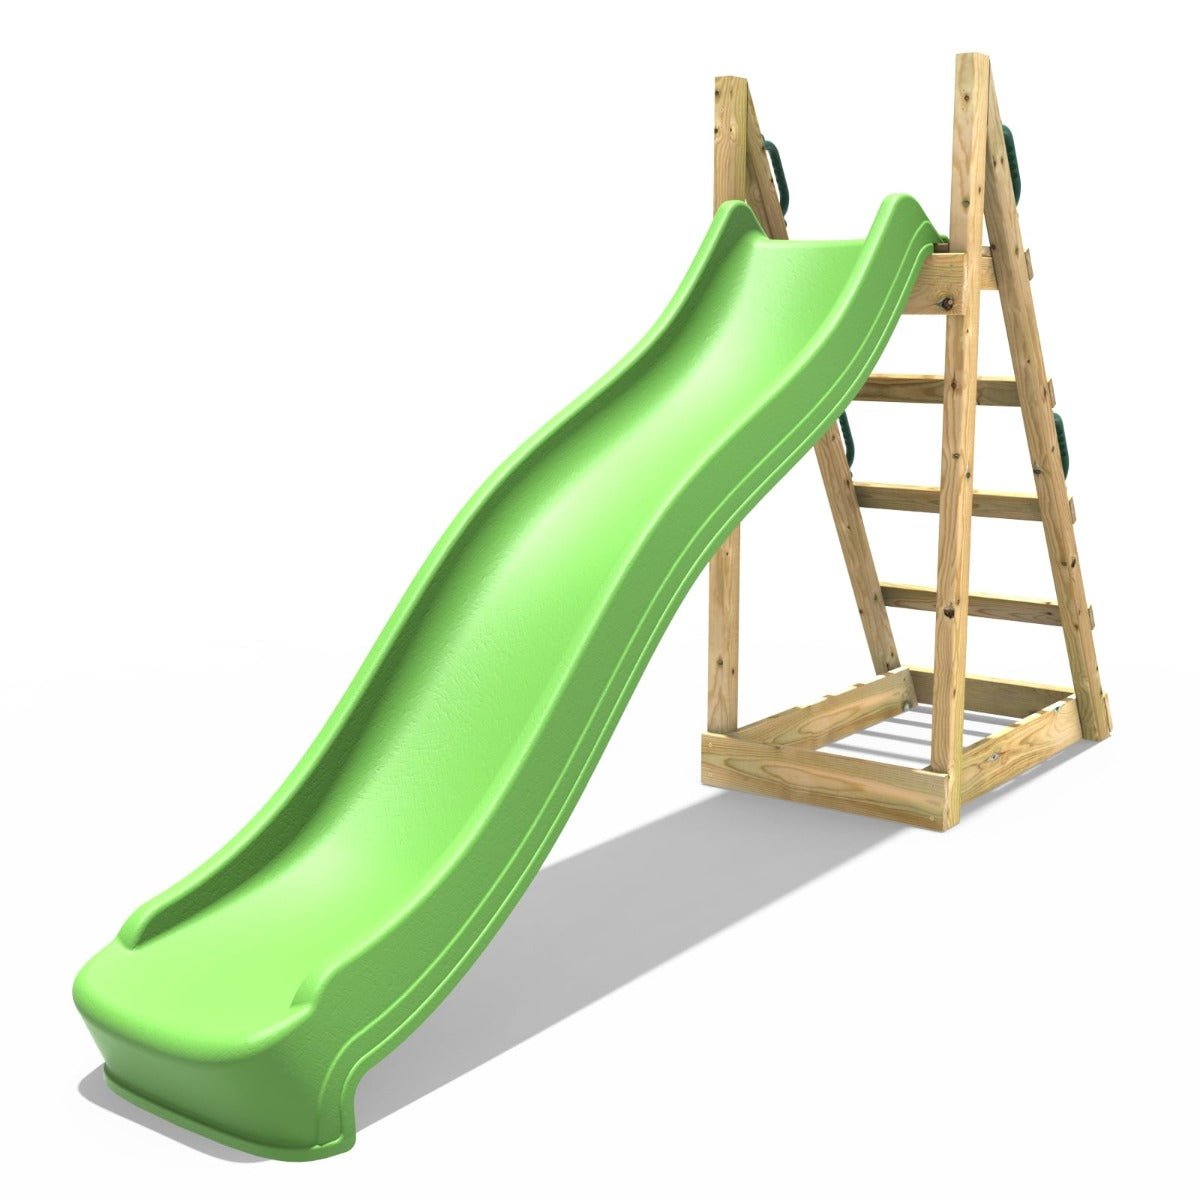 Rebo 8FT Free Standing Slide with Wooden Platform – Light Green